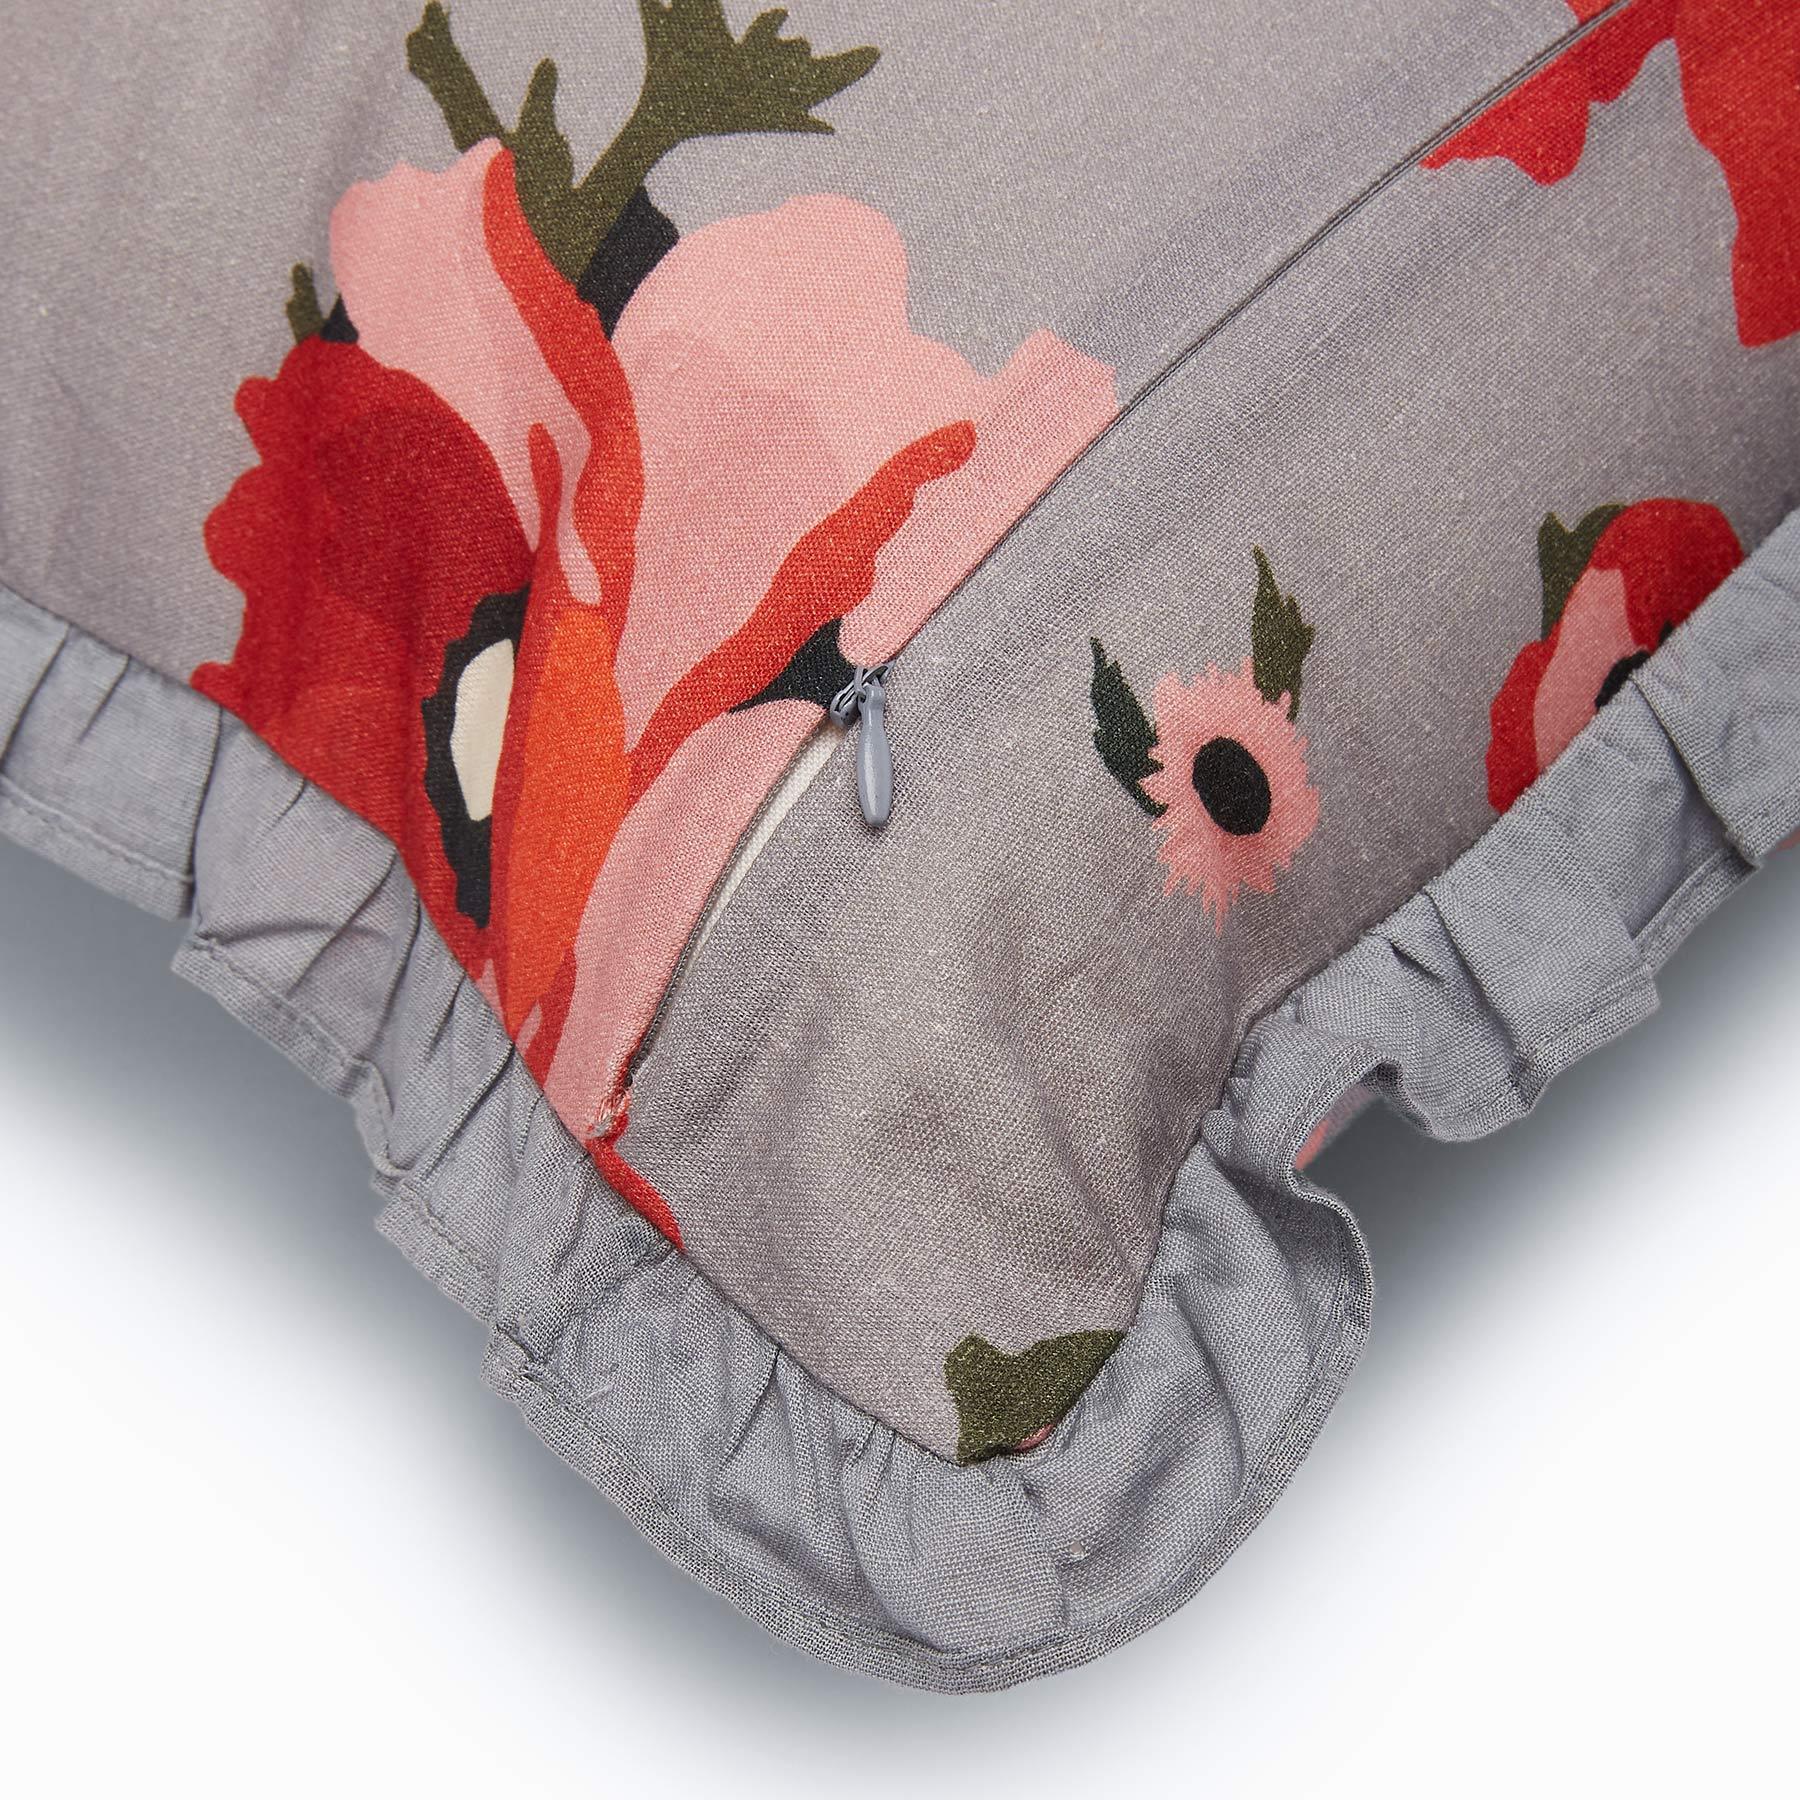 Grey Bloom Ruffle Cushion Cover